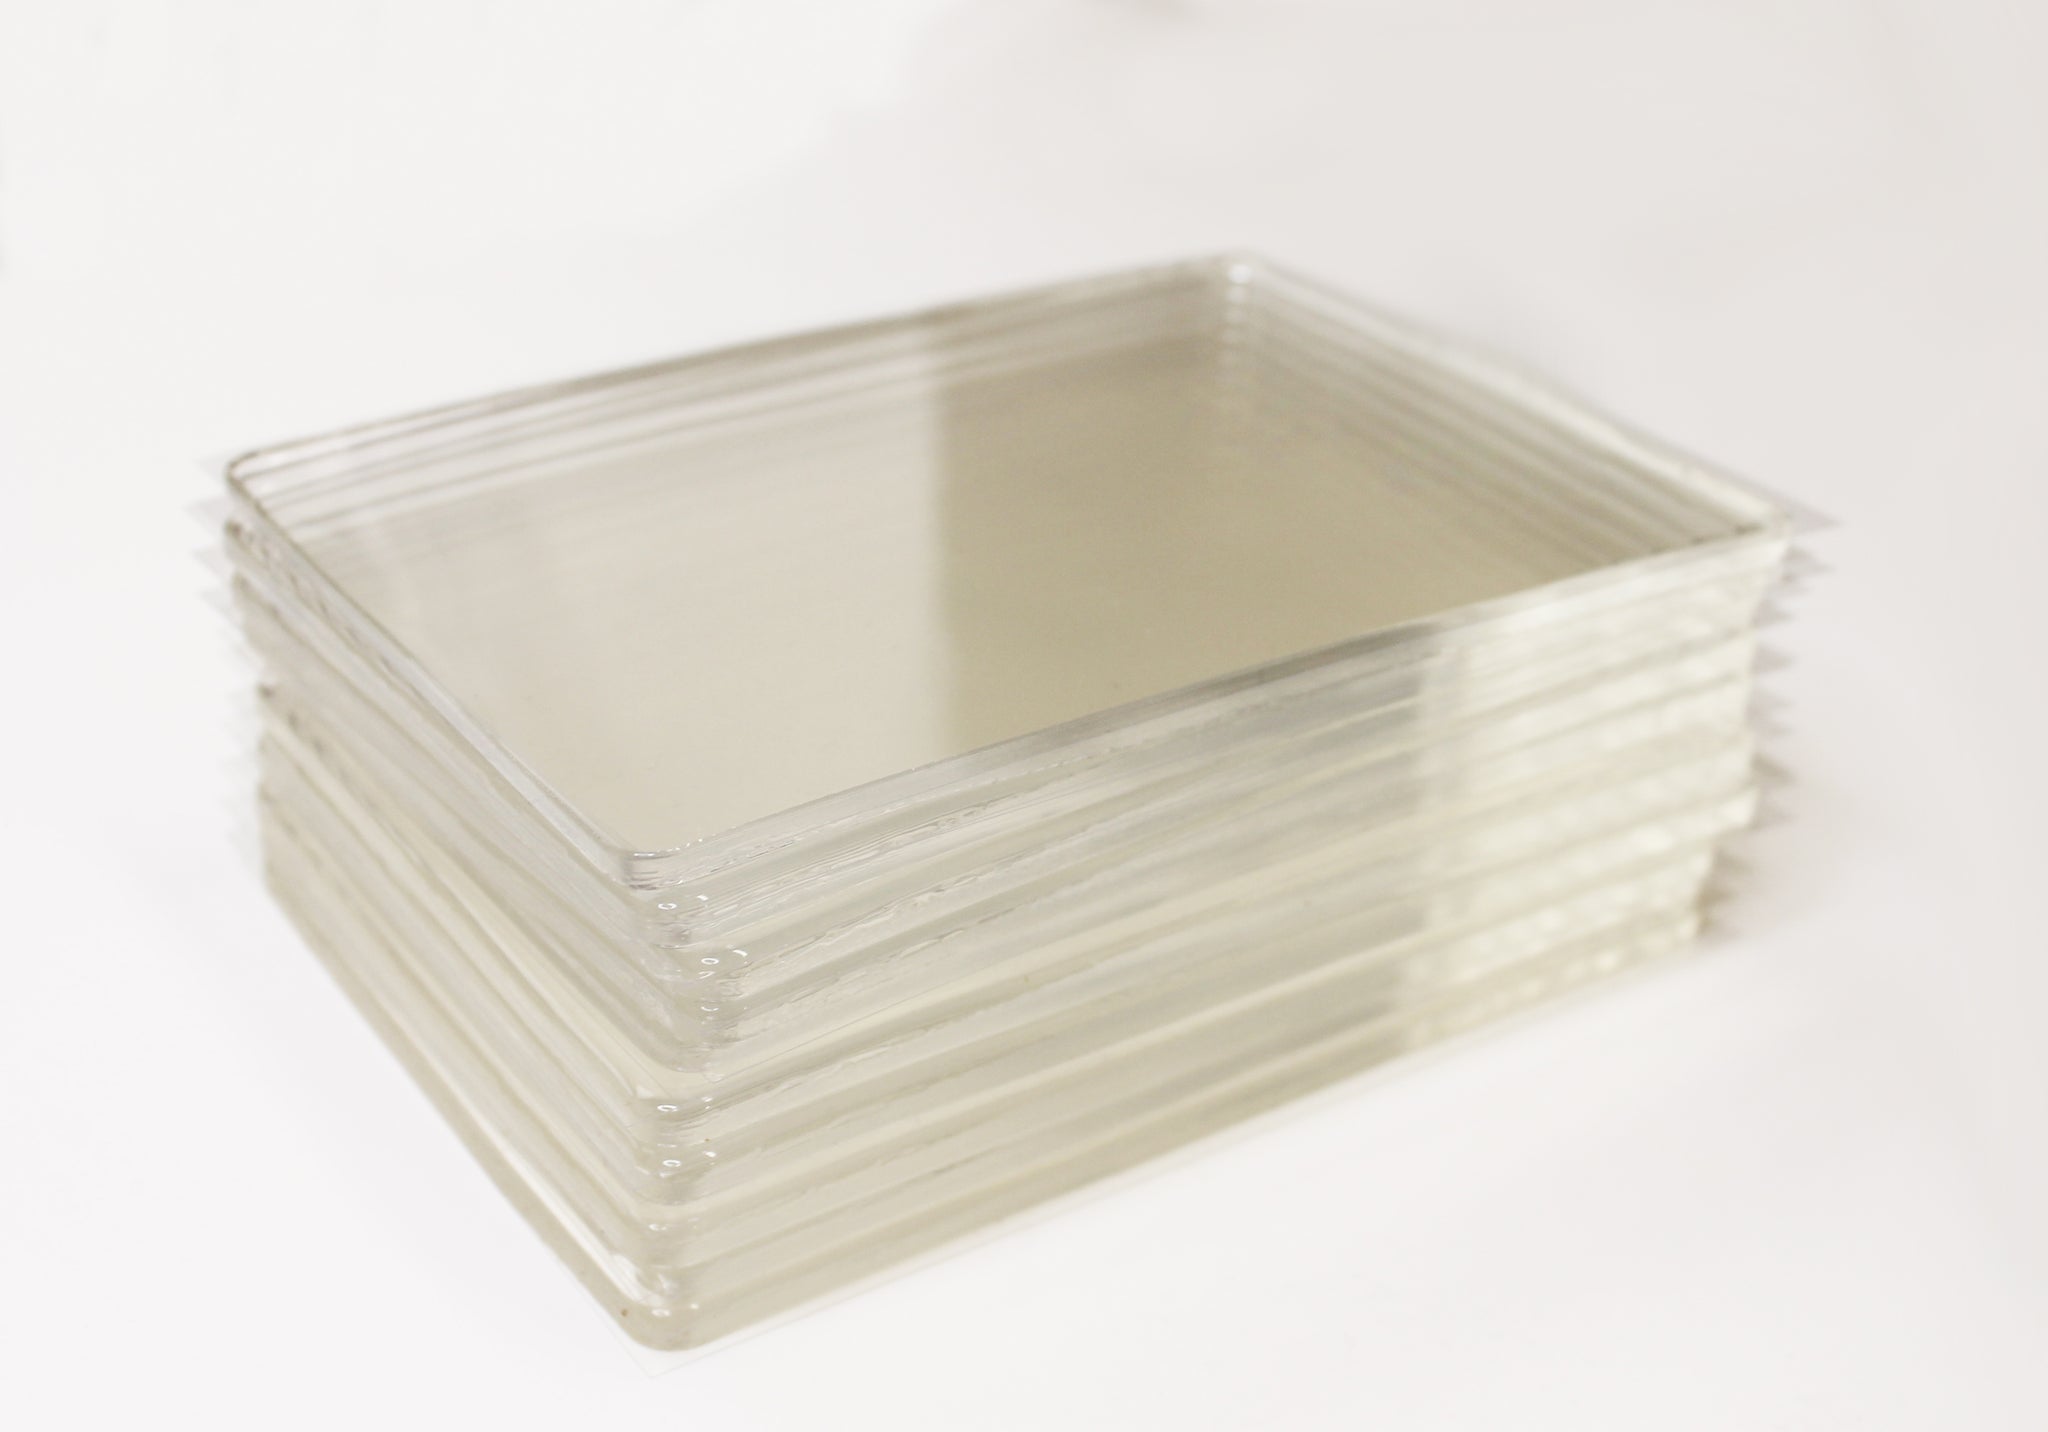 Gelli Arts - Gel Printing Plate 8" x 10" - Class Pack 11 Plates